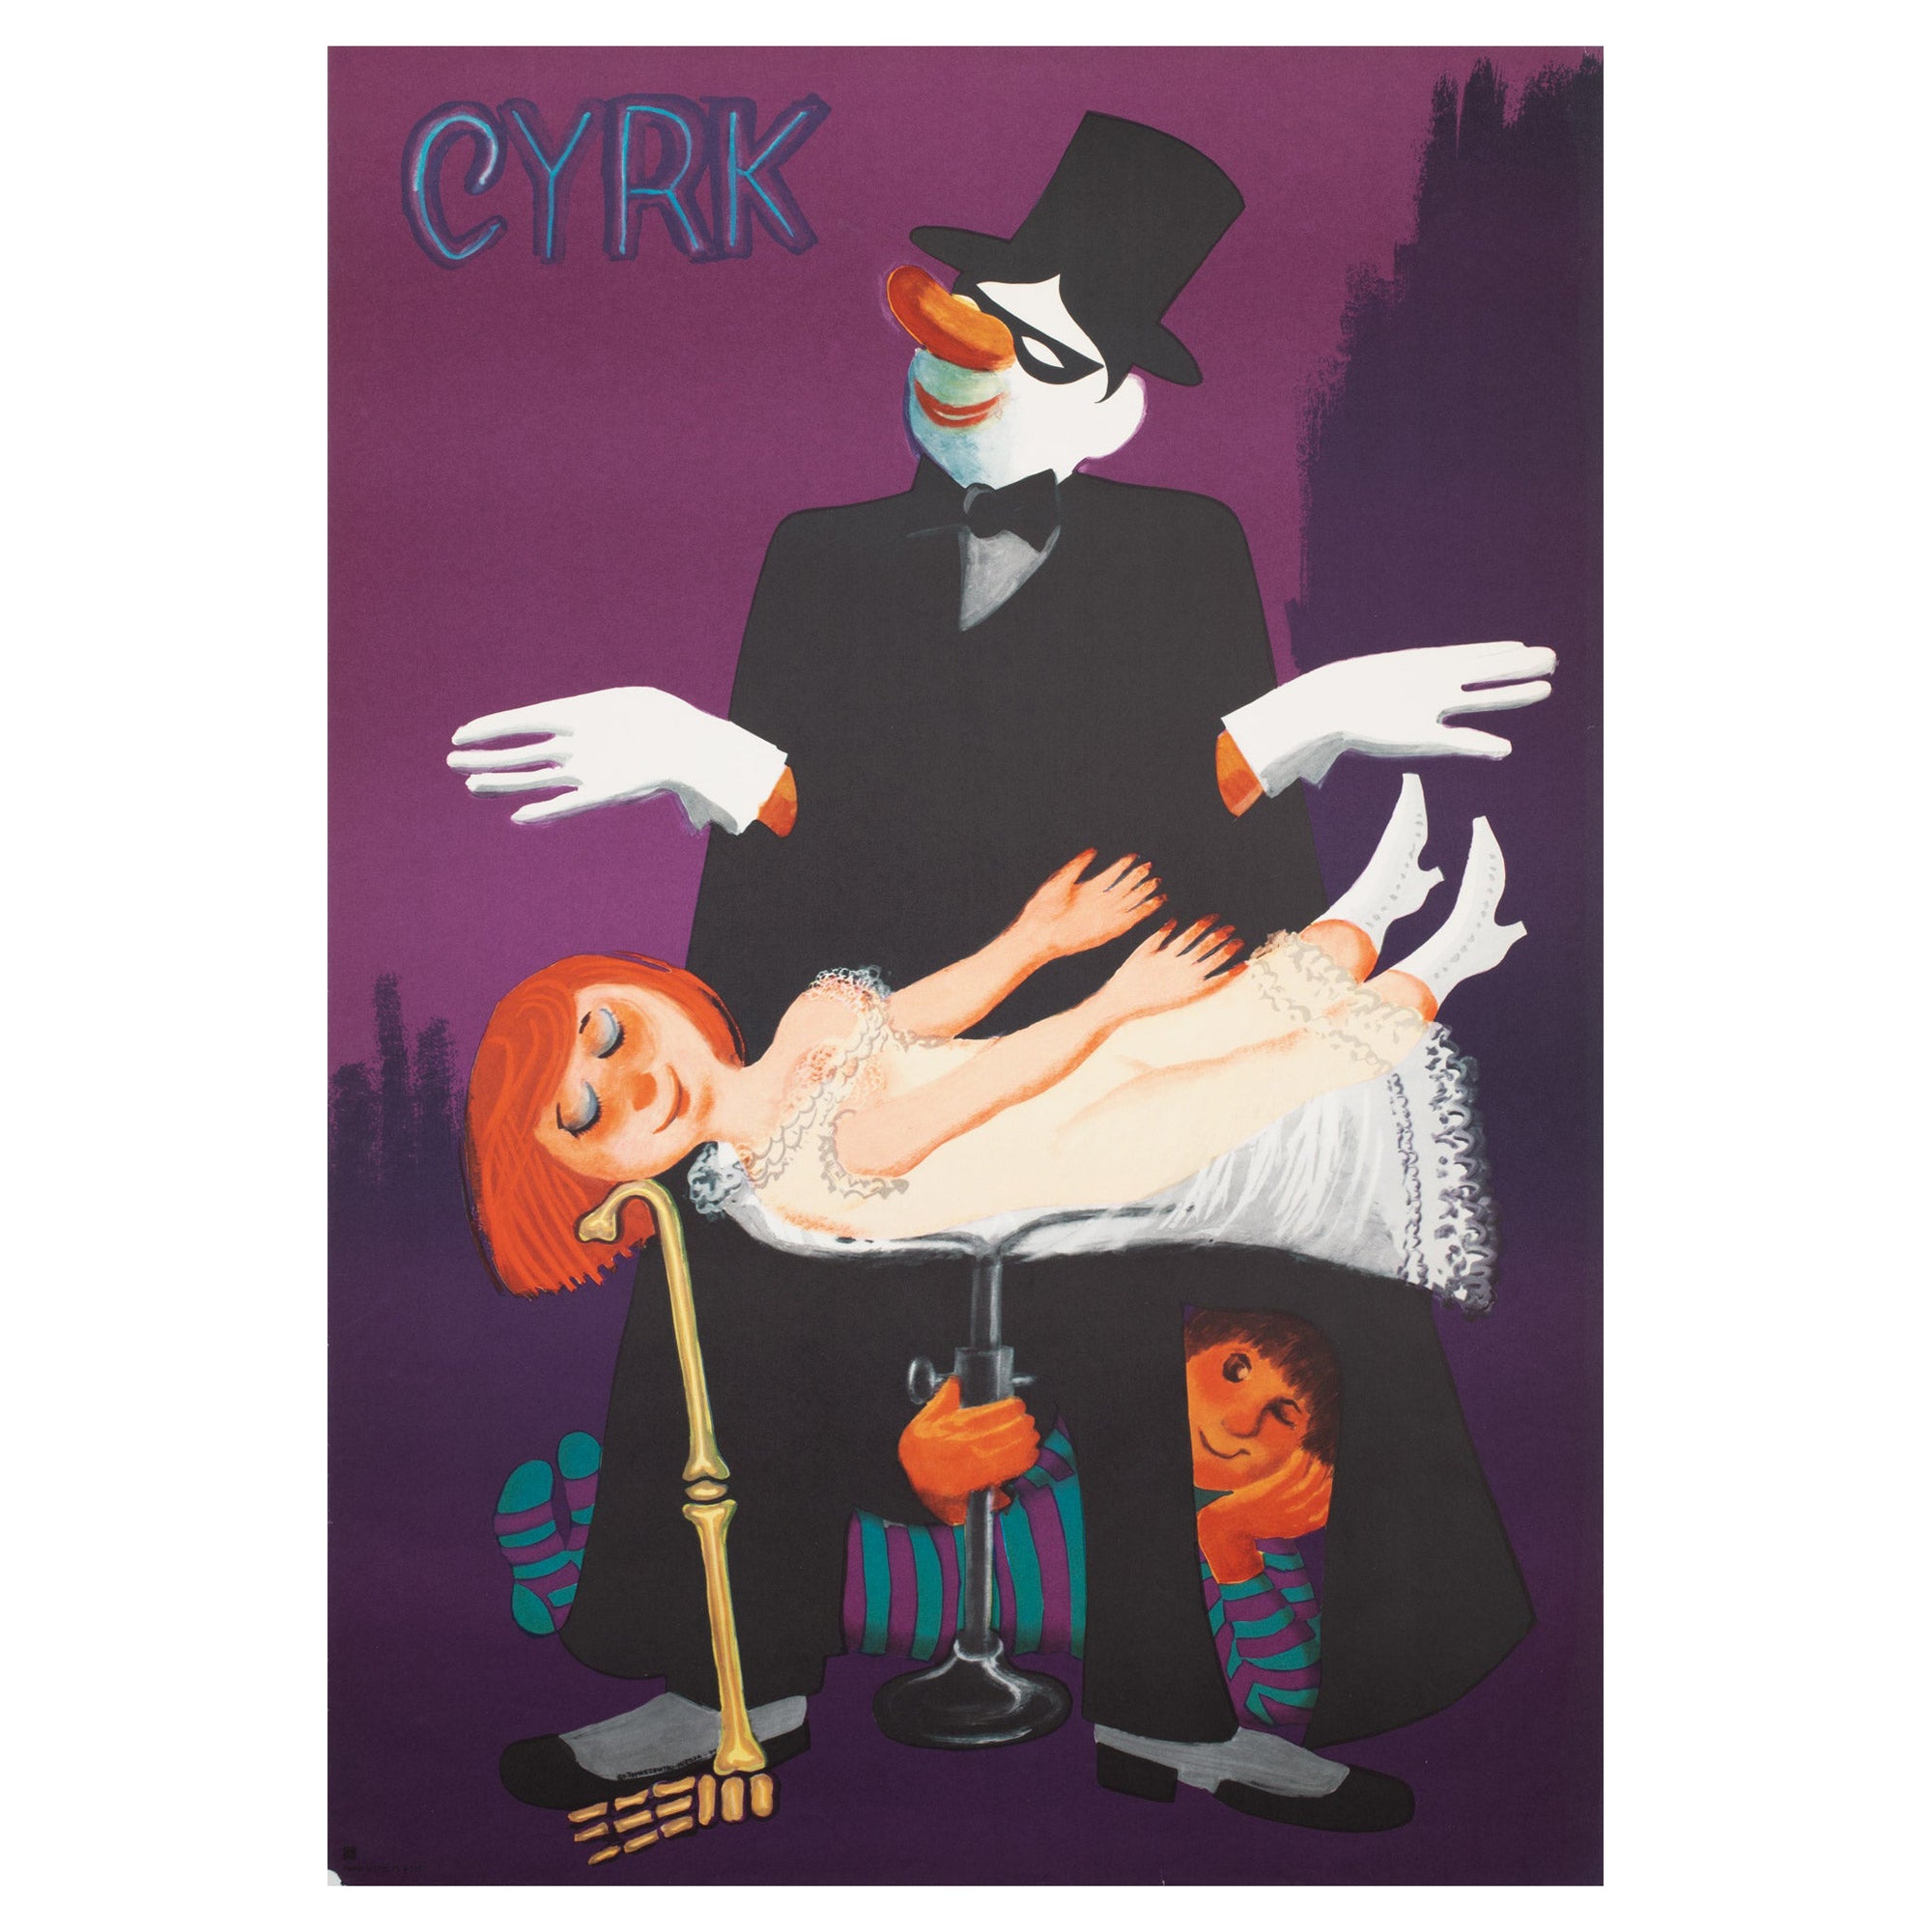 Cyrk Magician Levitatation 1975 Polish Circus Poster, Miedza-Tomaszewski For Sale